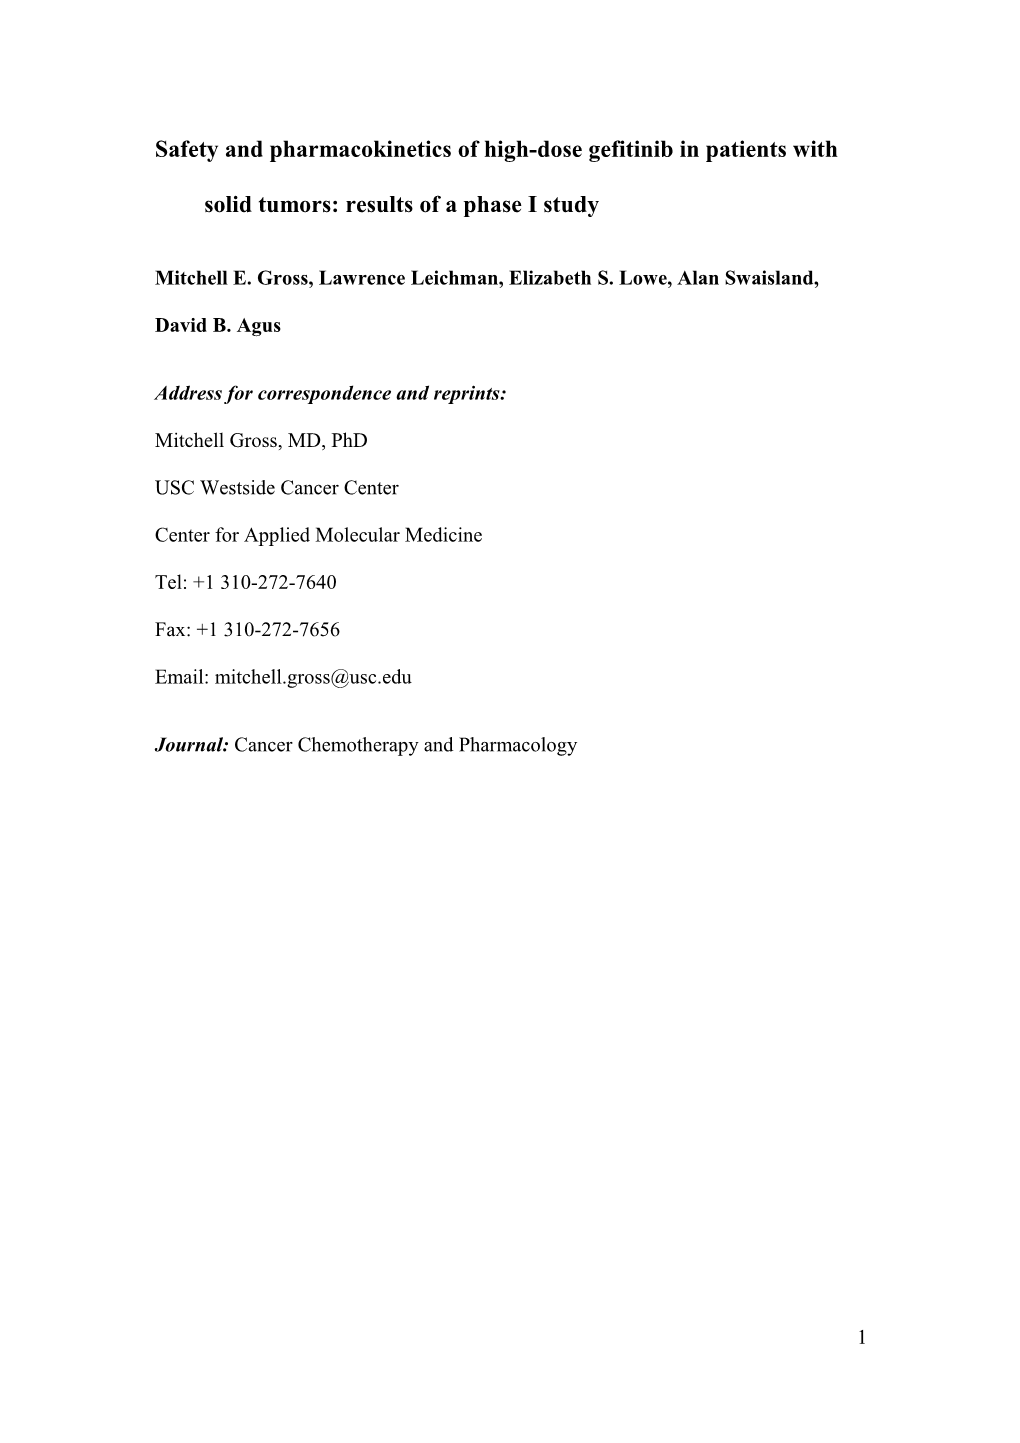 Mitchell E. Gross, Lawrence Leichman,Elizabeths.Lowe, Alan Swaisland, David B.Agus